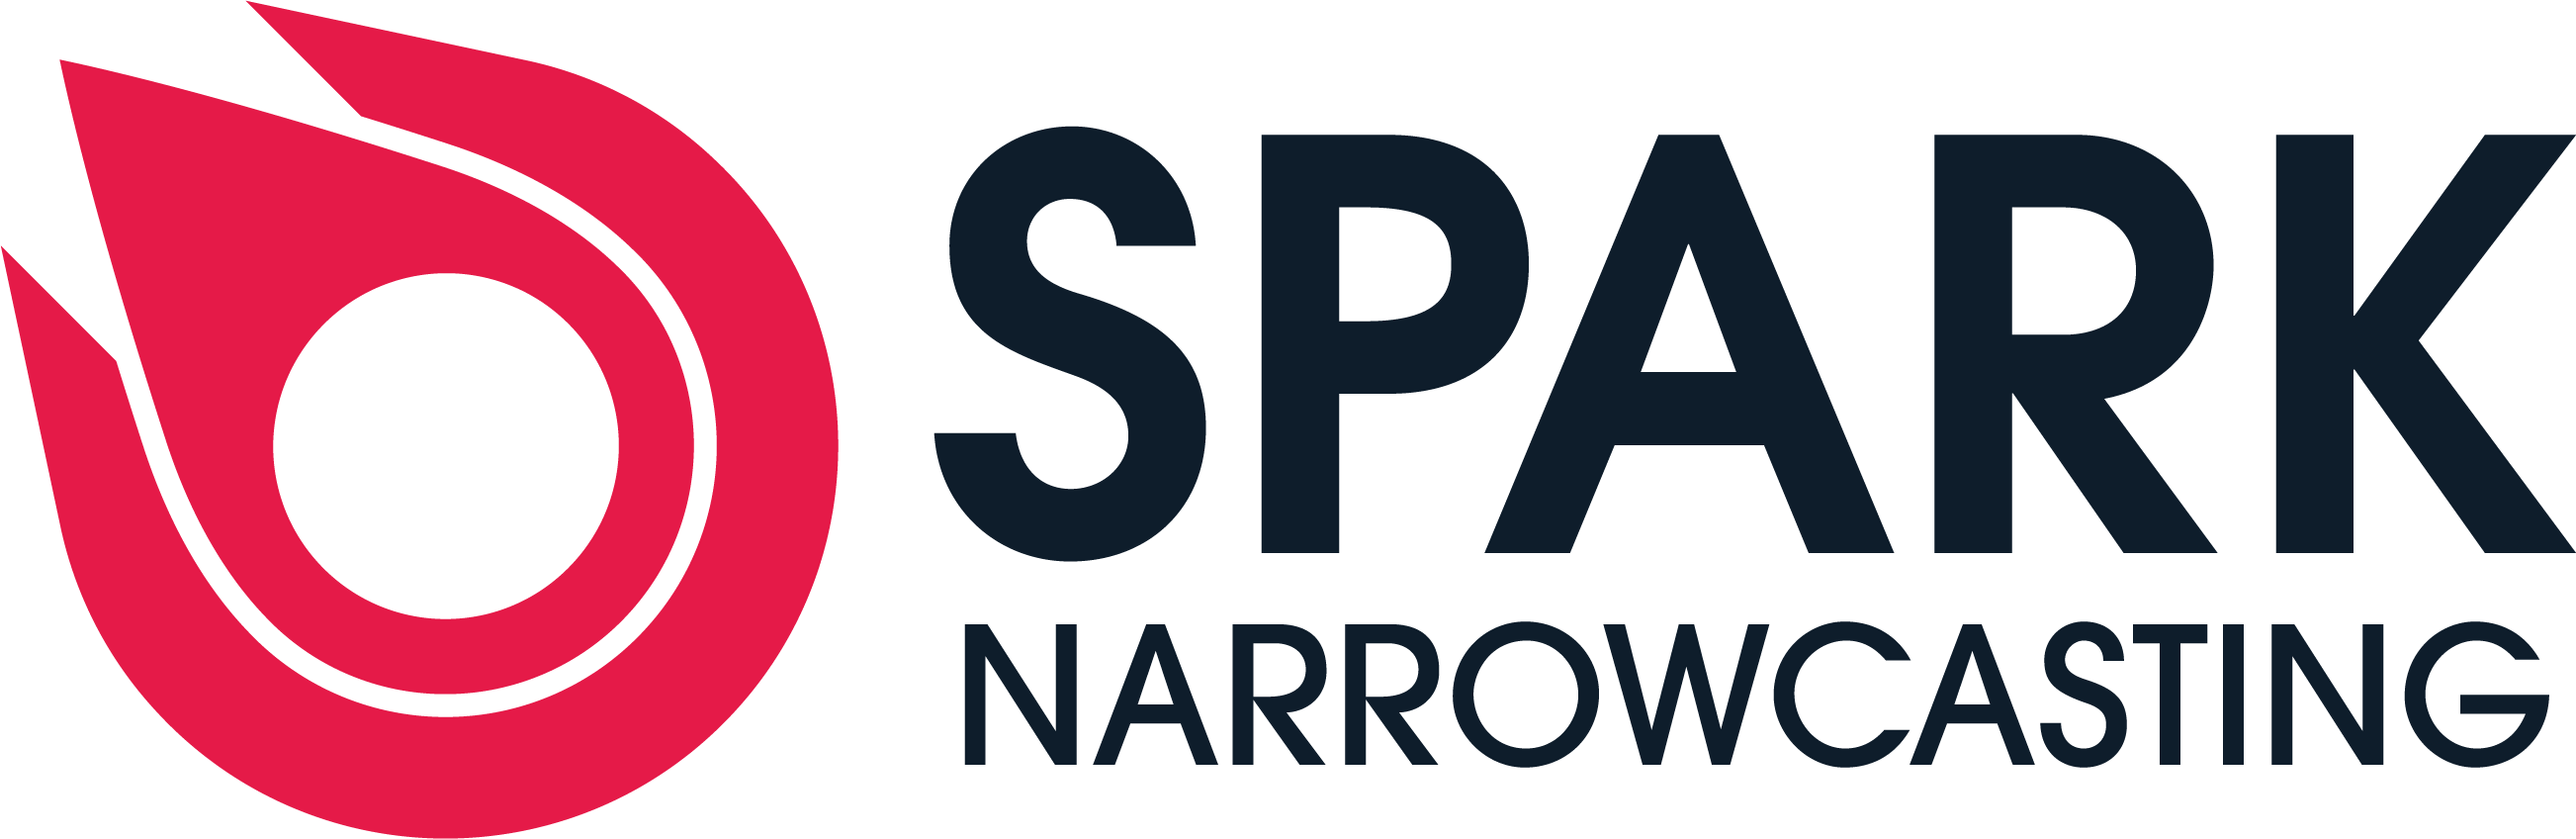 Spark Narrowcasting logo